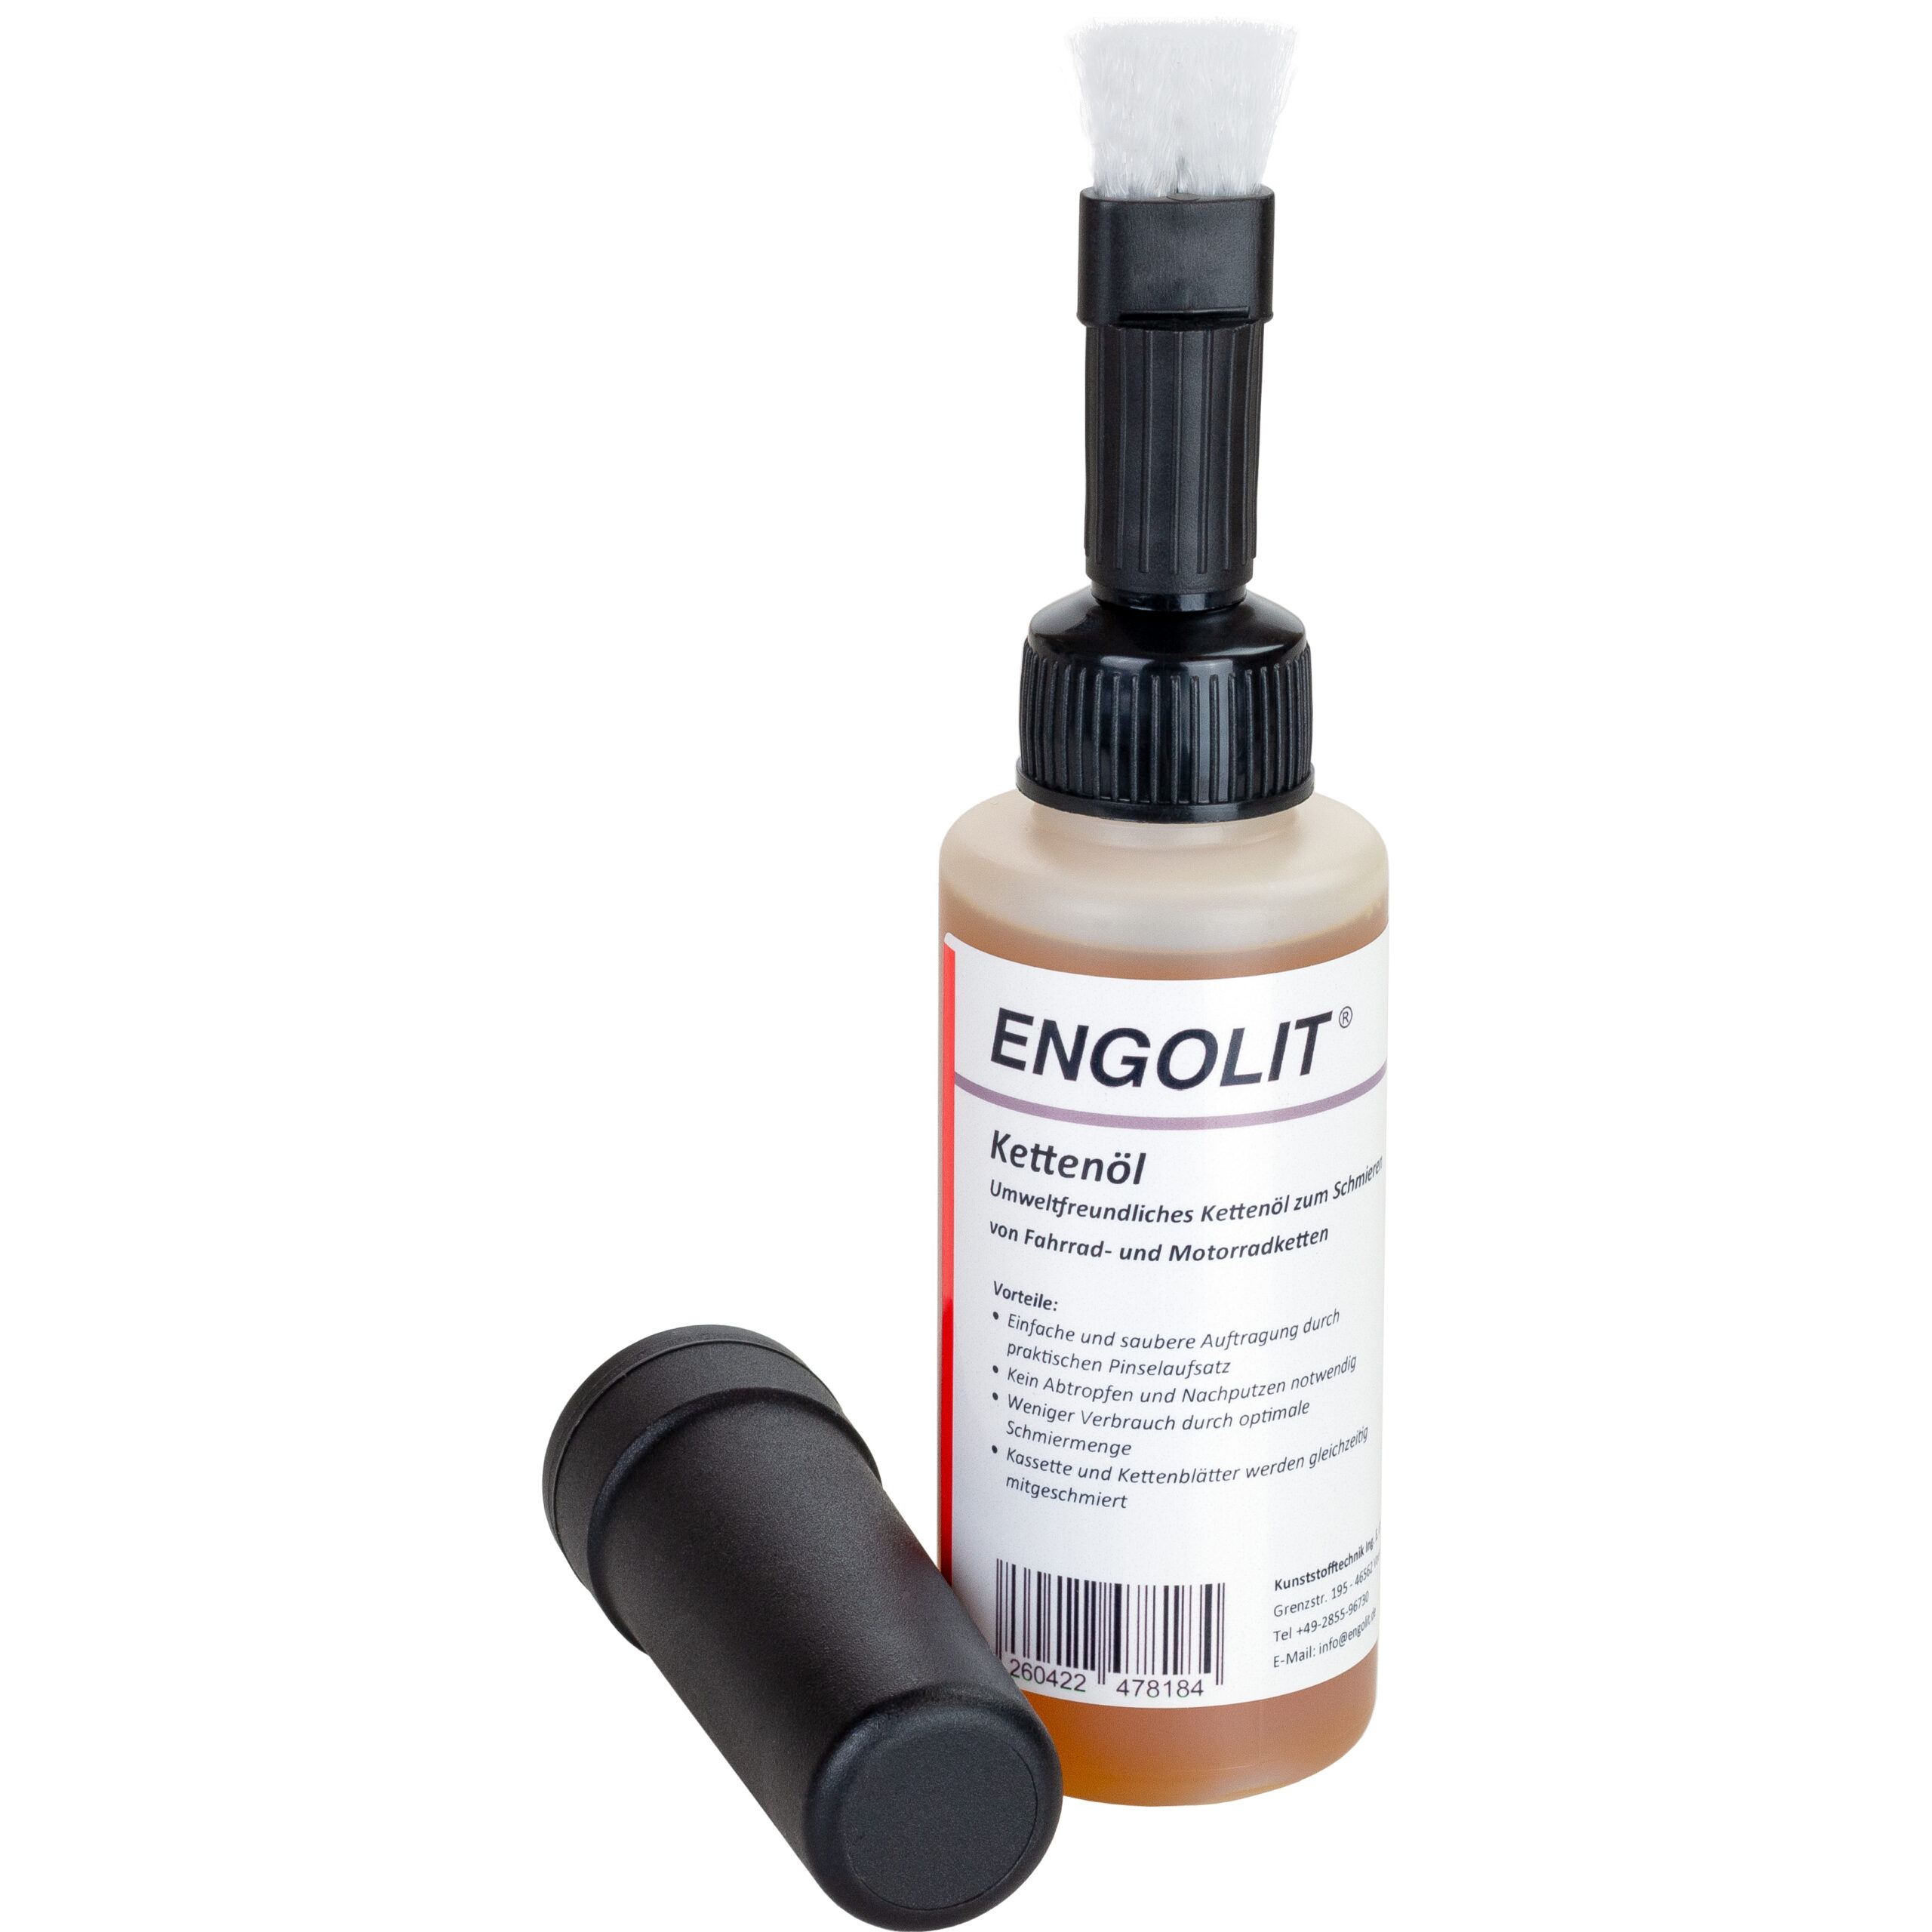 ENGOLIT Kettenöl inkl. Pinselaufsatz -100 ml - ENGOLIT®